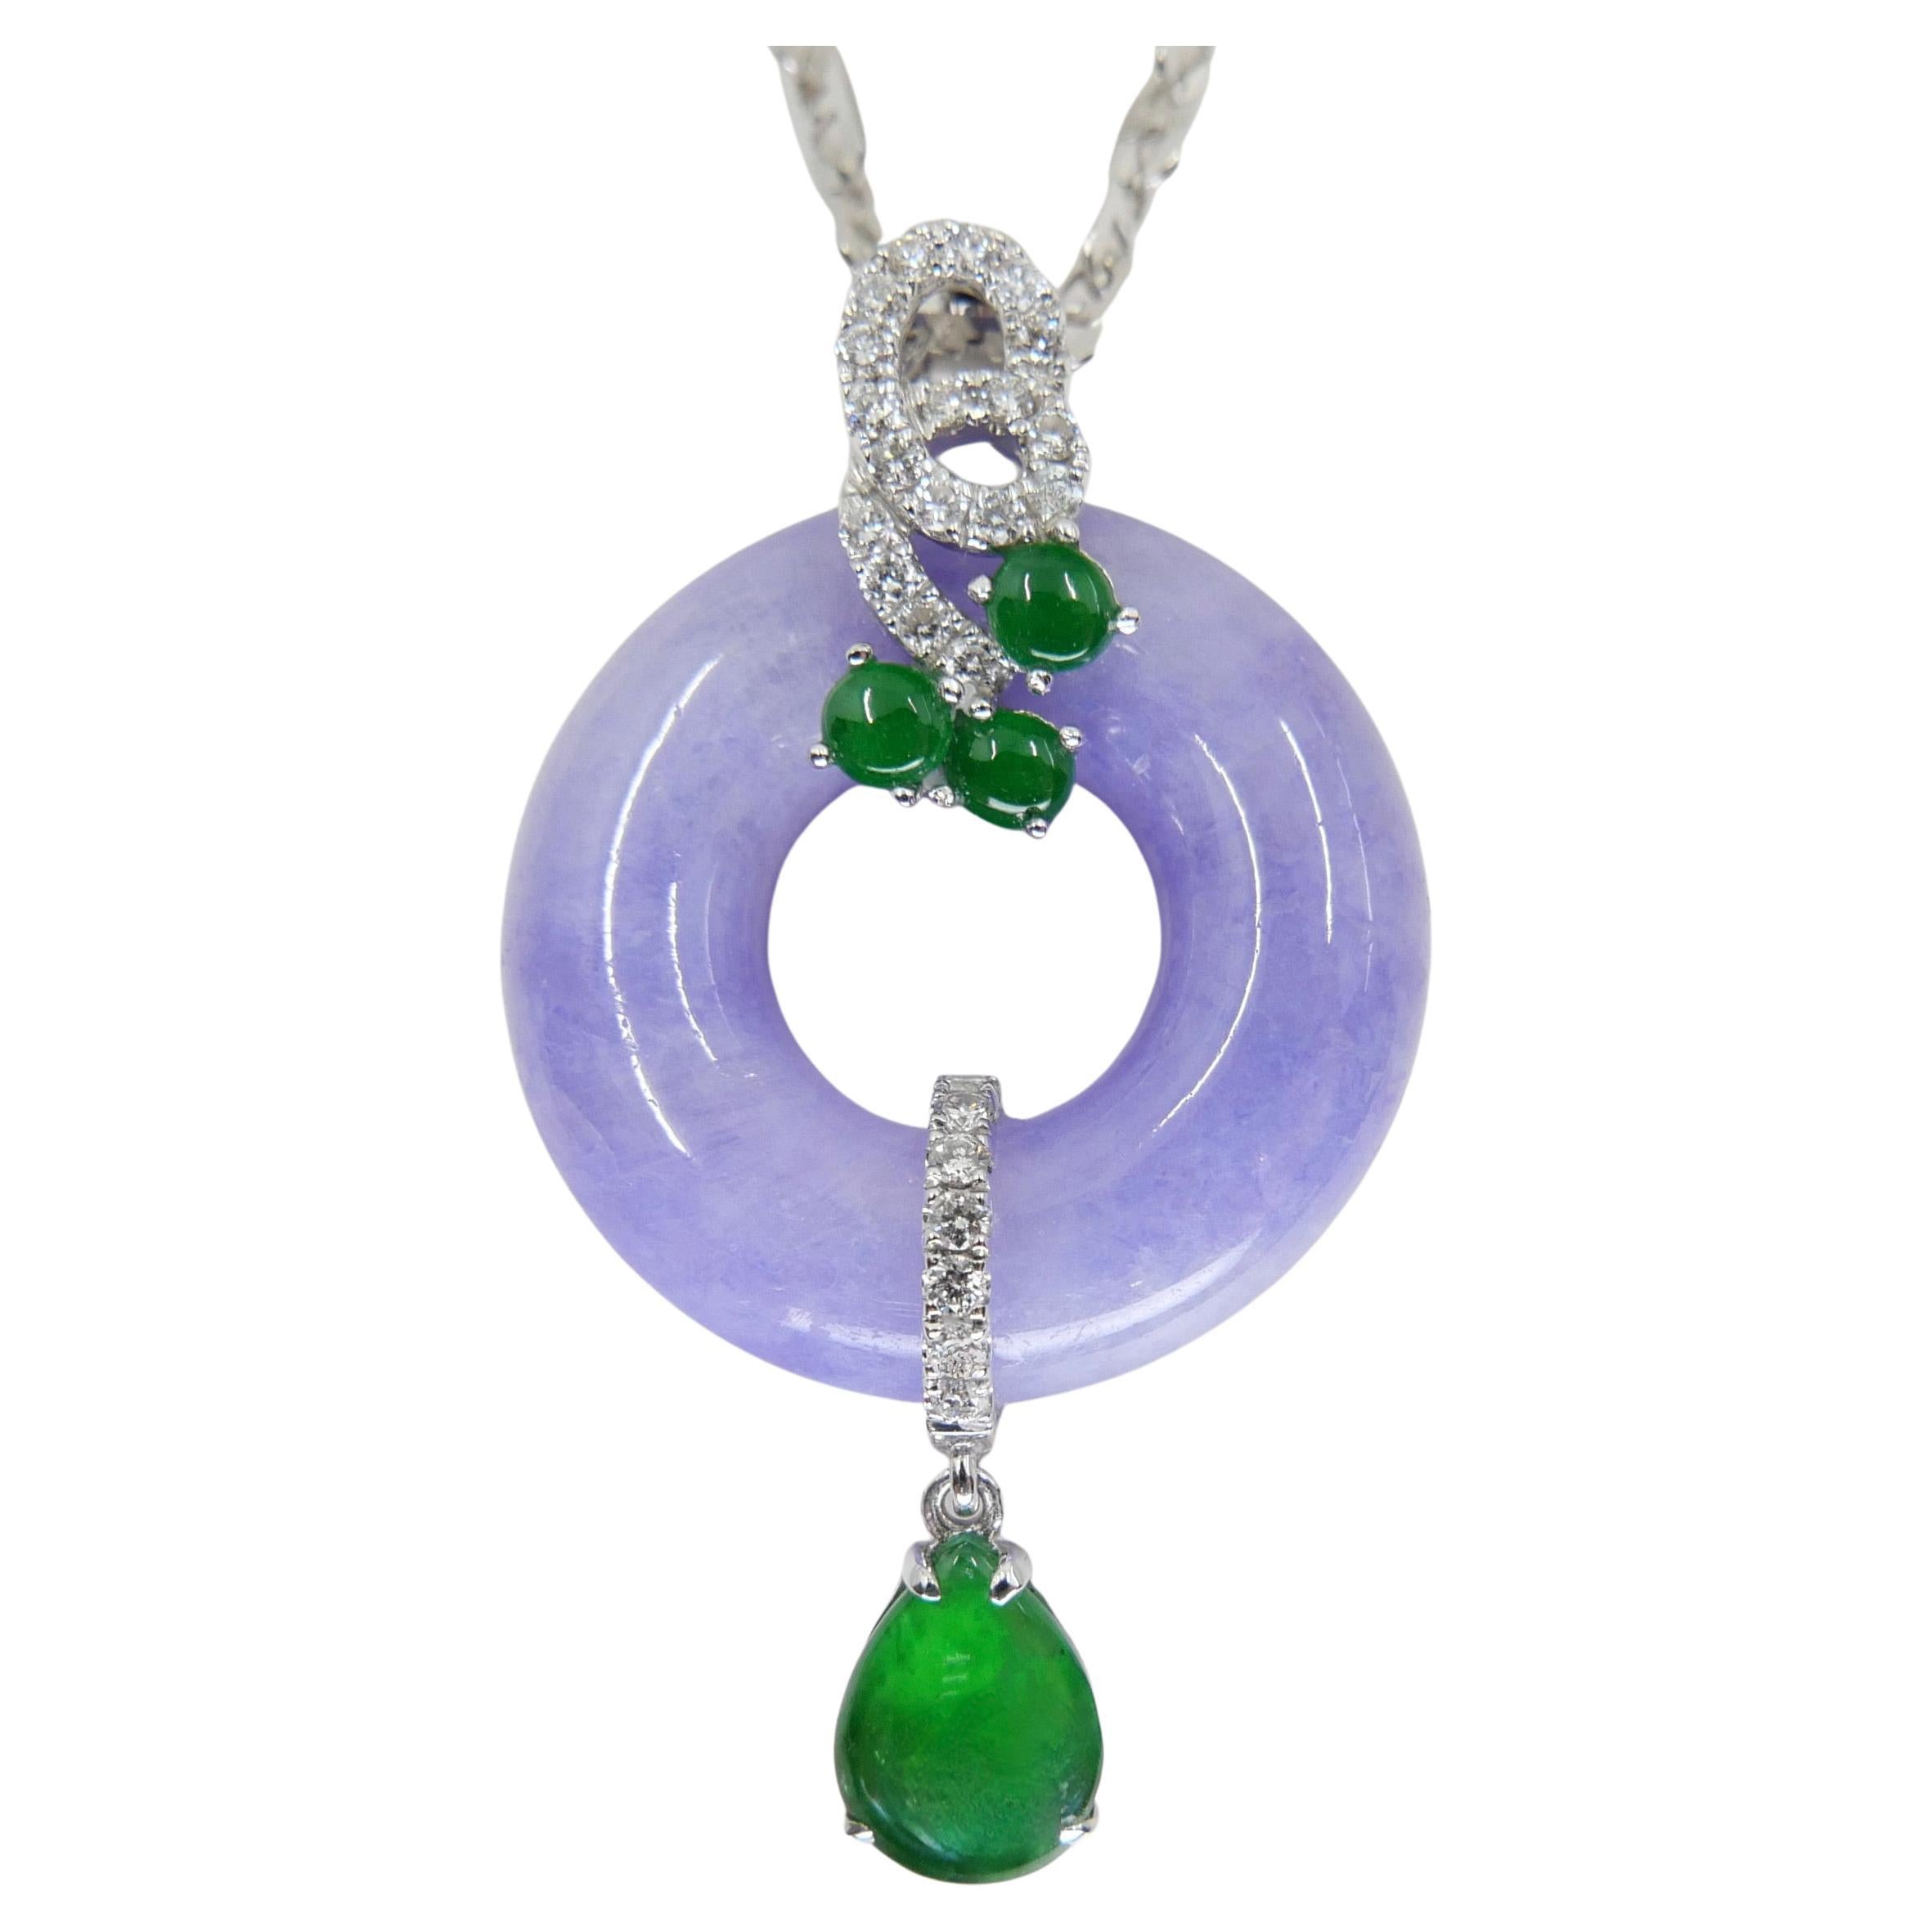 Certified Lavender & Imperial Green Jade Diamond Pendant Drop Necklace. 